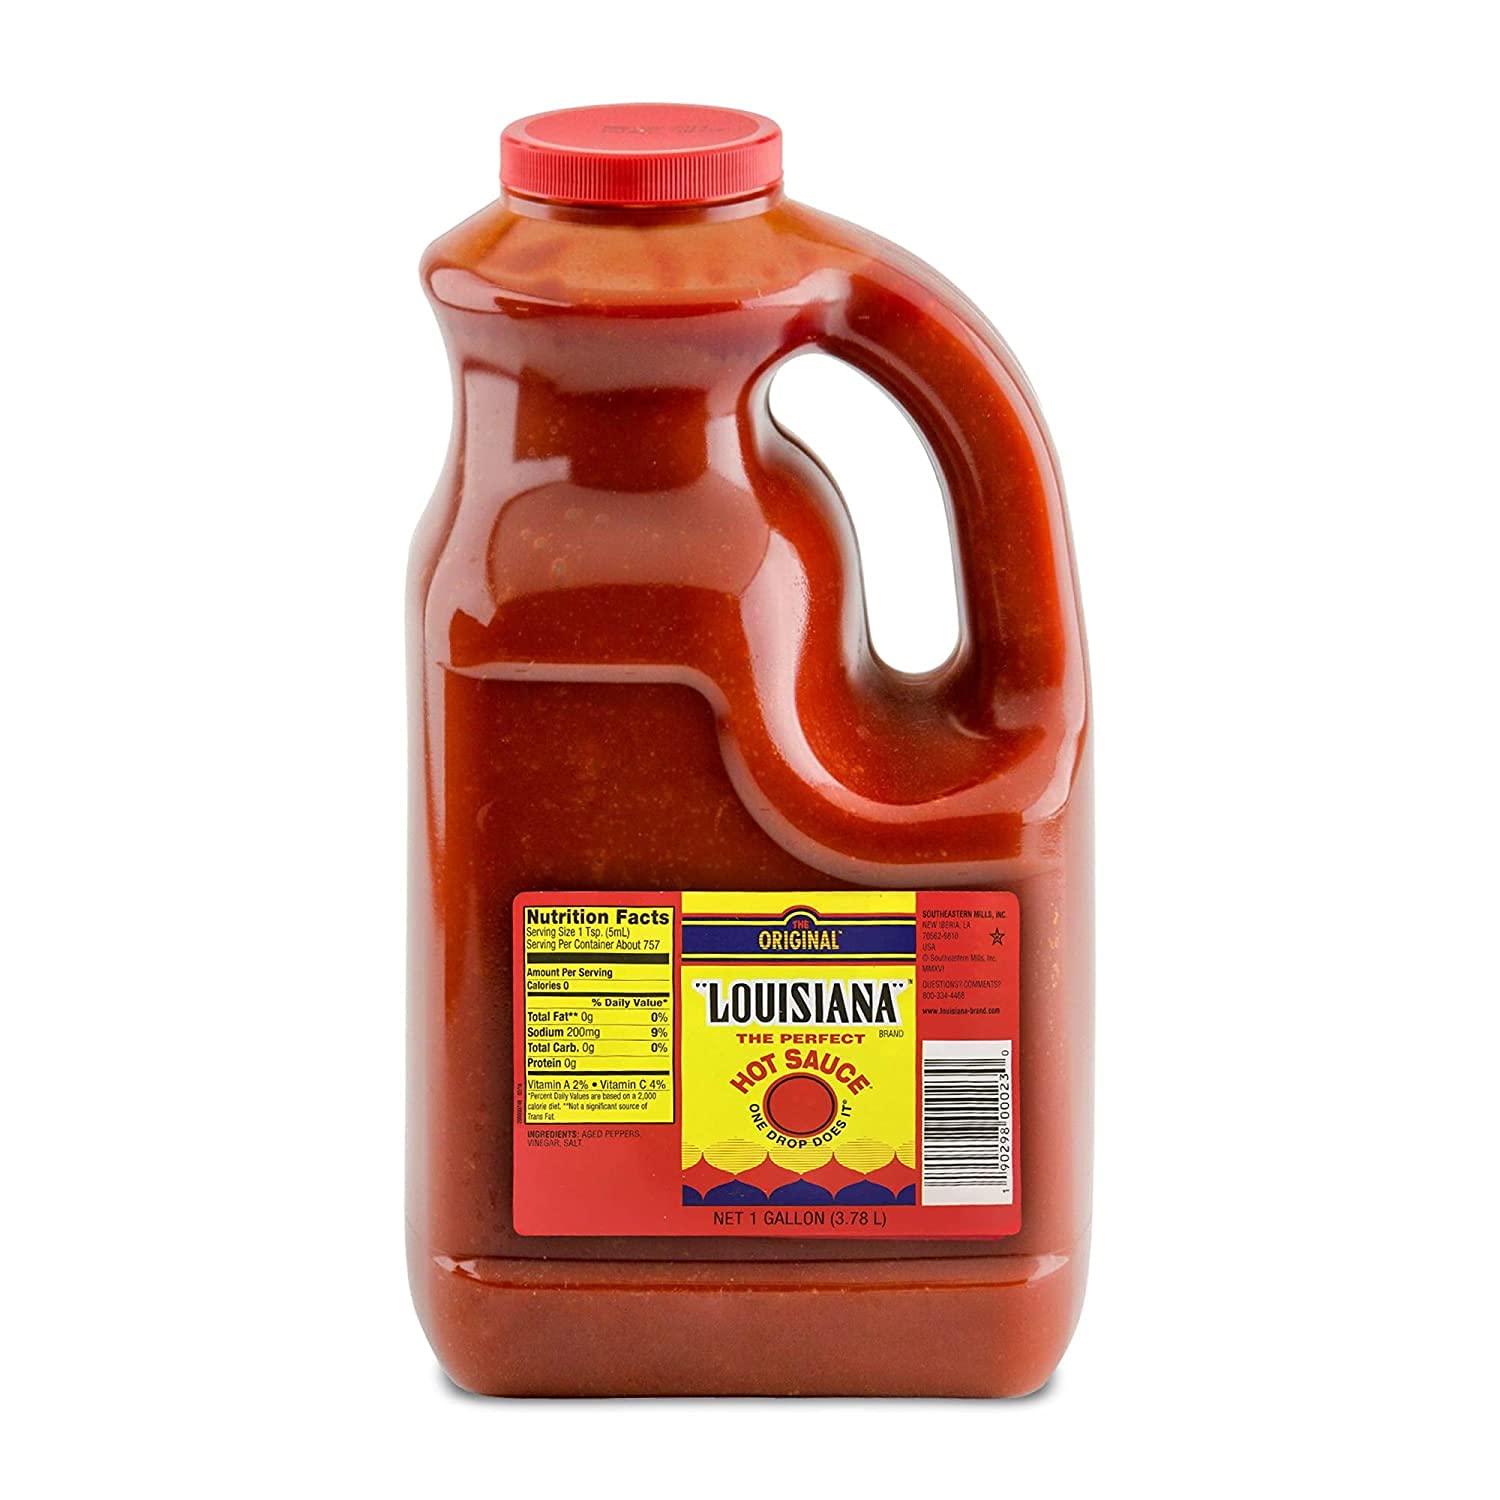 The Original Louisiana Brand Hot Sauce (6 oz.)